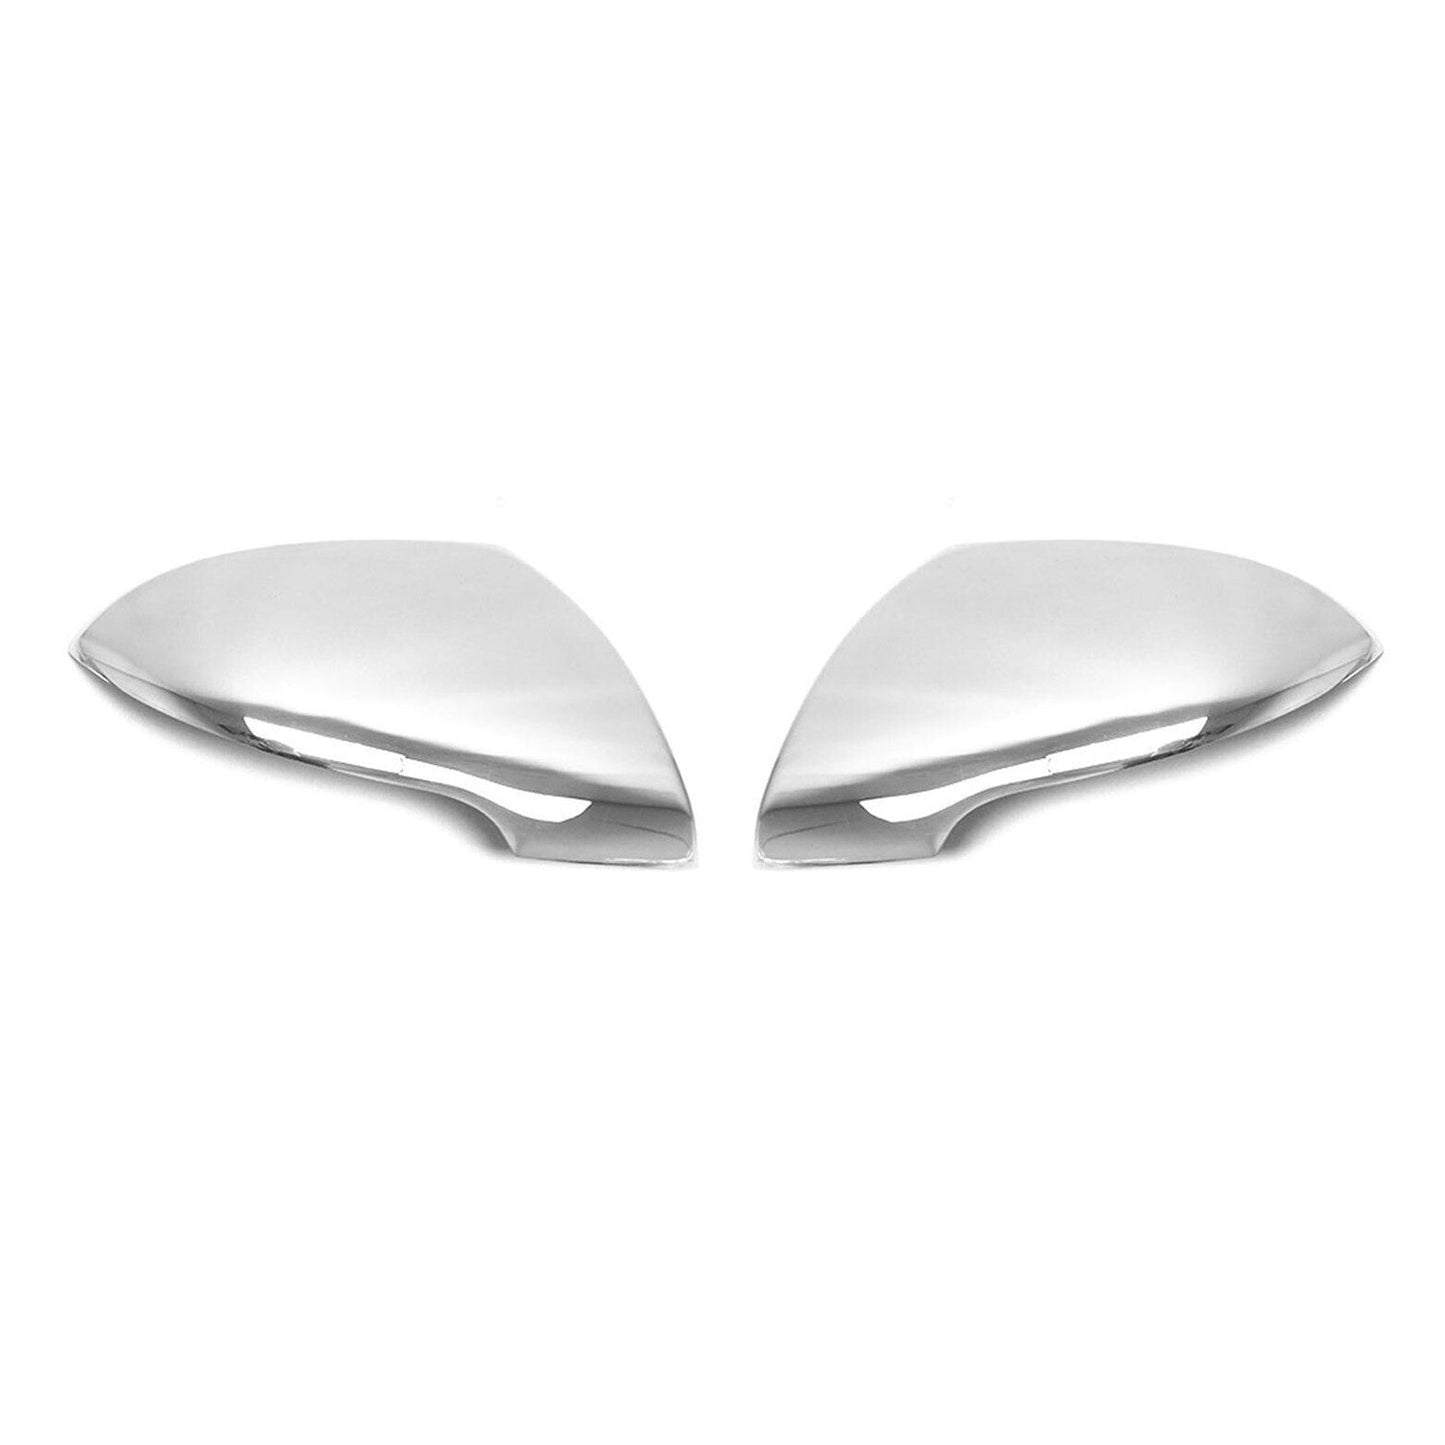 OMAC Side Mirror Cover Caps Fits Kia Sportage 2011-2014 Steel Silver 2 Pcs 4016111